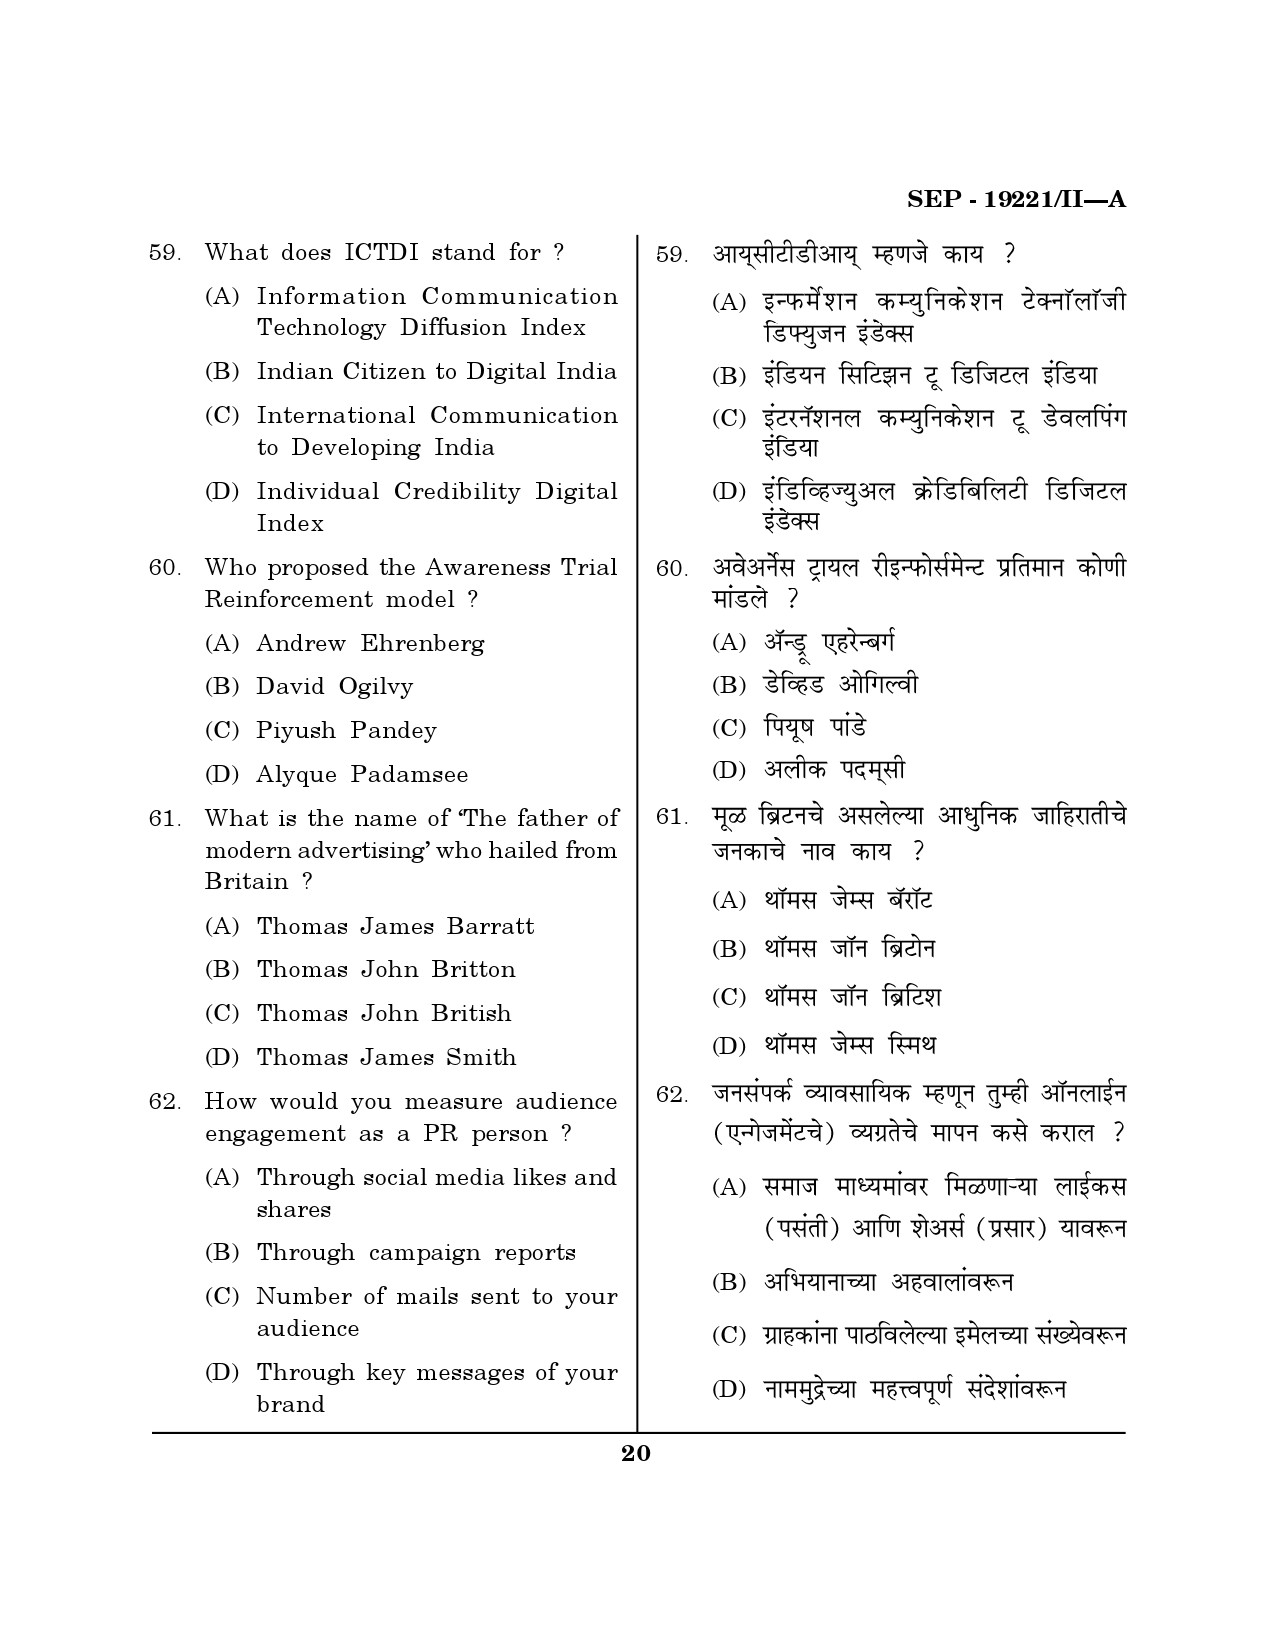 Maharashtra SET Journalism and Mass Communication Exam Question Paper September 2021 19